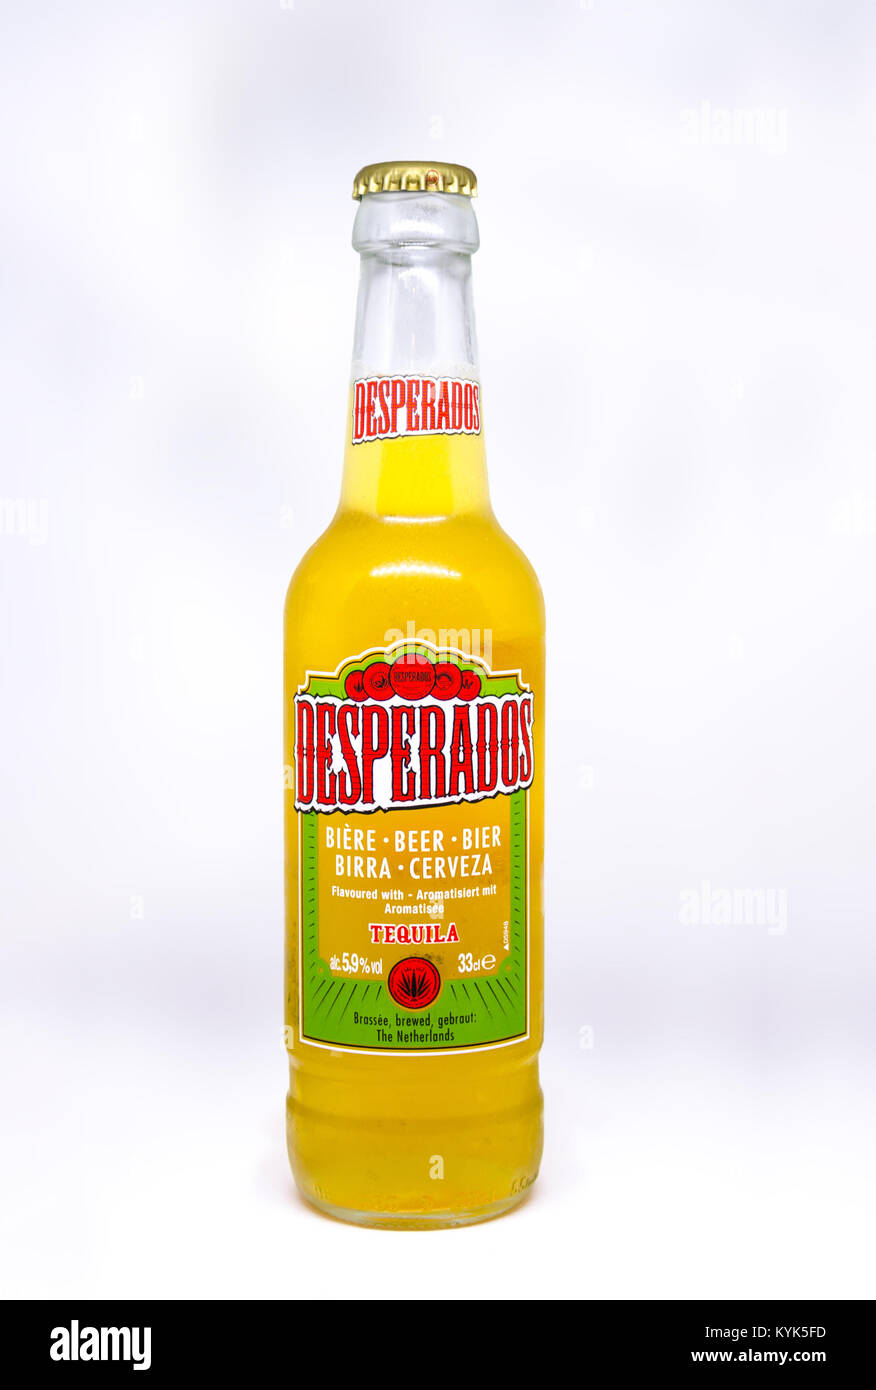 Desperados Original Tequila Flavoured Beer Bottles - ASDA Groceries